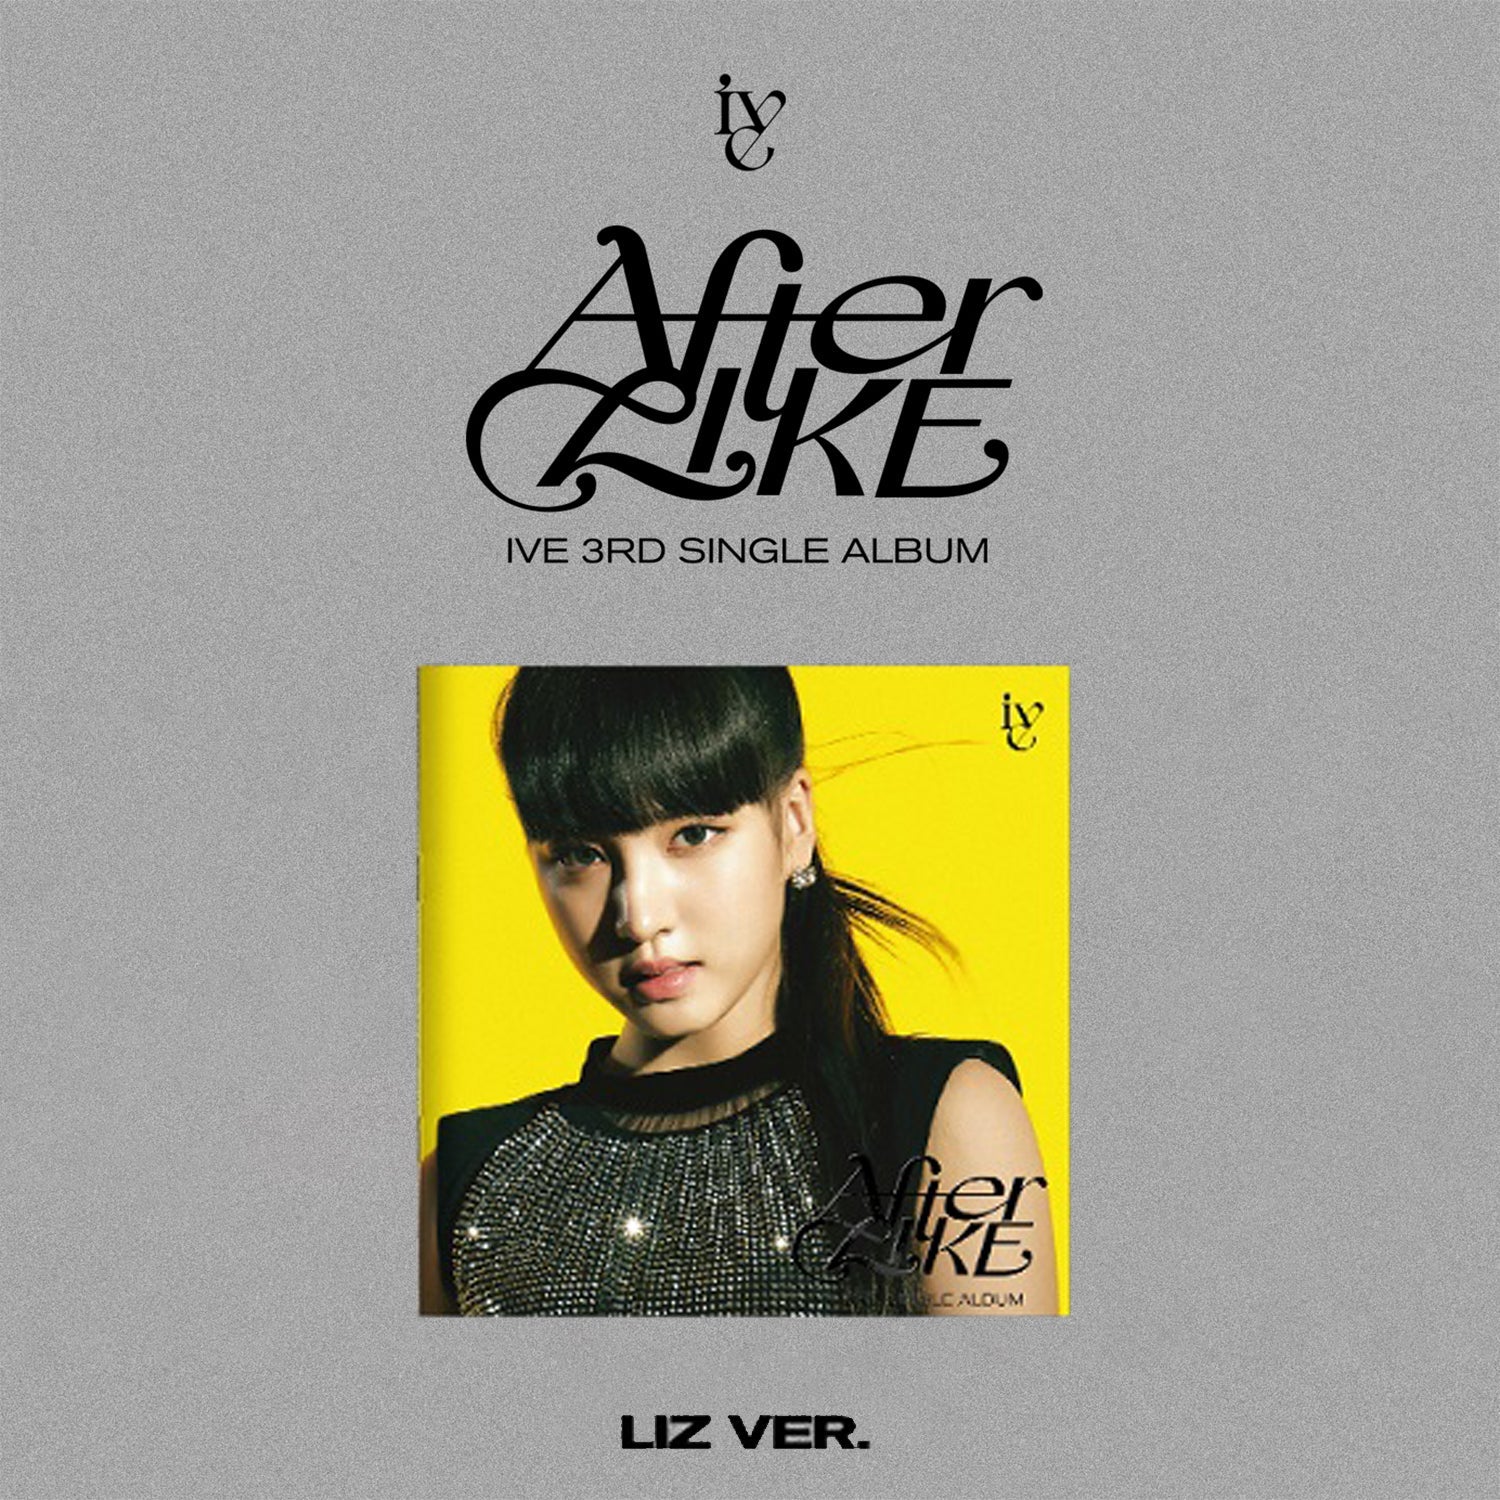 IVE 3RD SINGLE ALBUM 'AFTER LIKE' (JEWEL) LIZ VERSION COVER